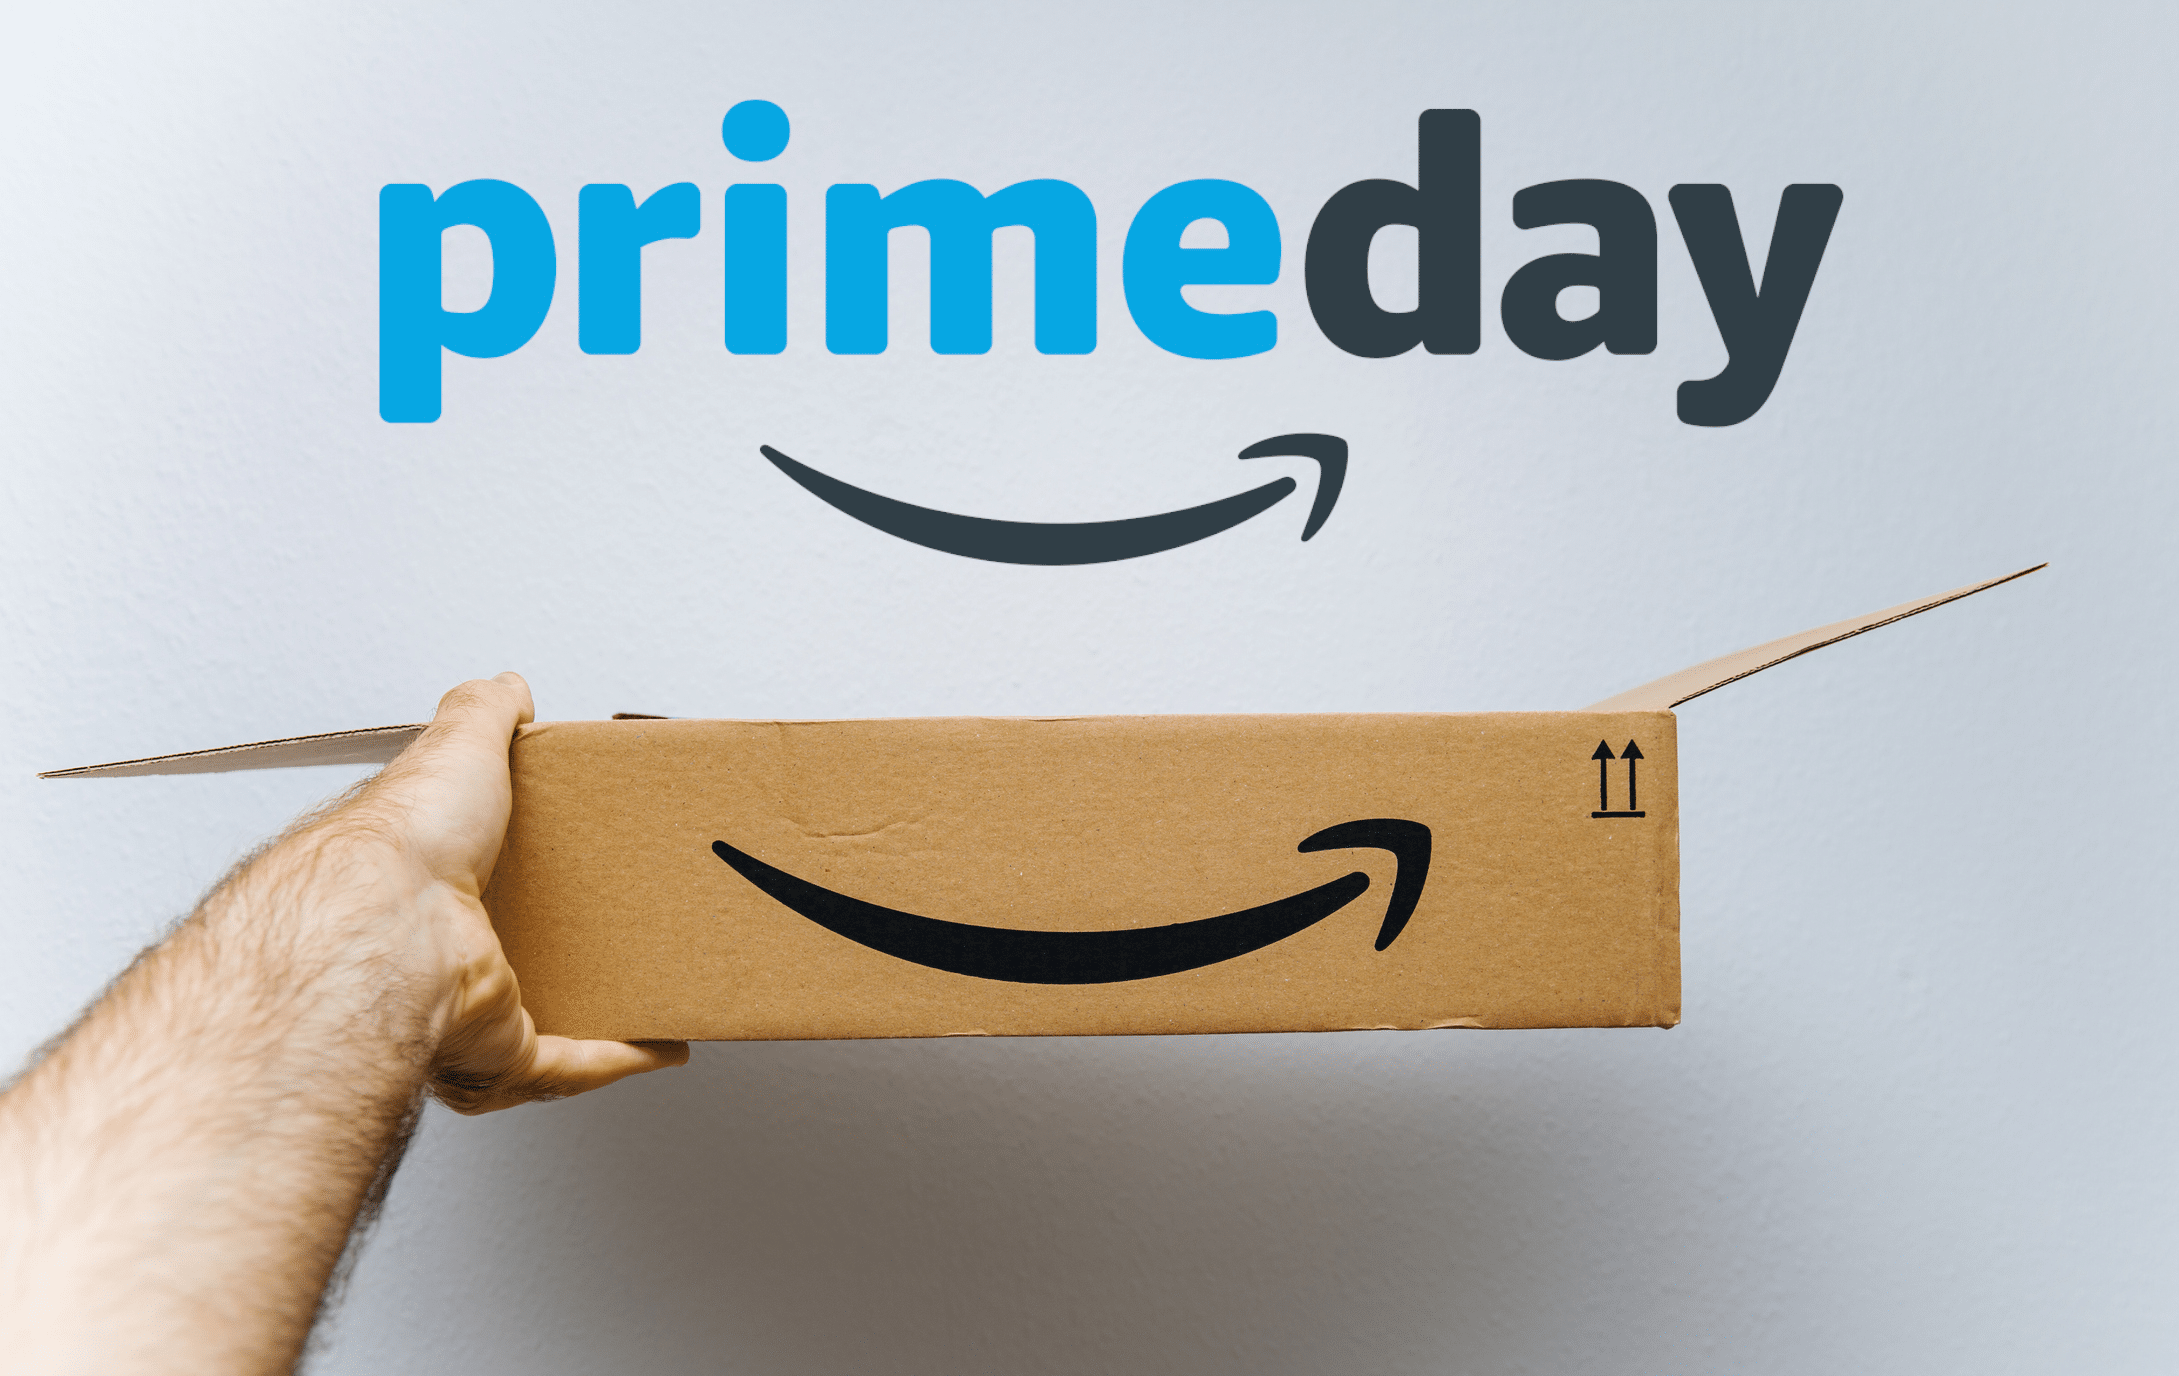 Amazon-Prime-Day